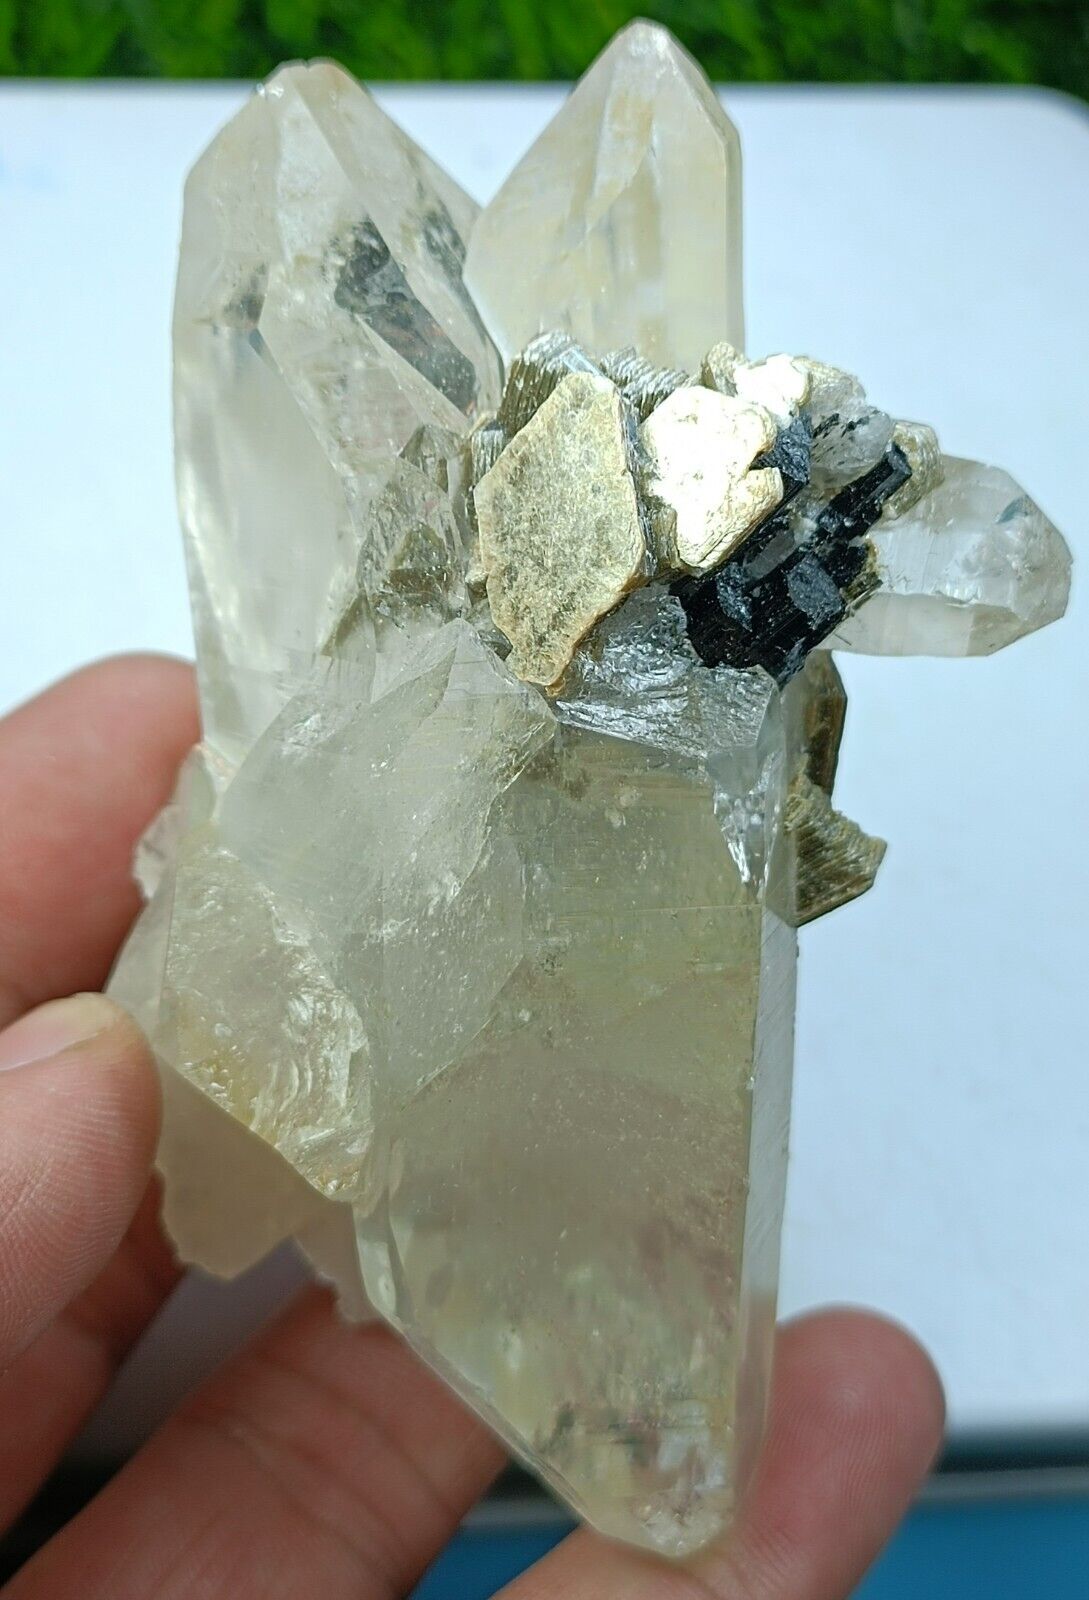 Light Smoky Quartz Twin Crystals Specimen with Black Tourmaline & Muscovite Mica